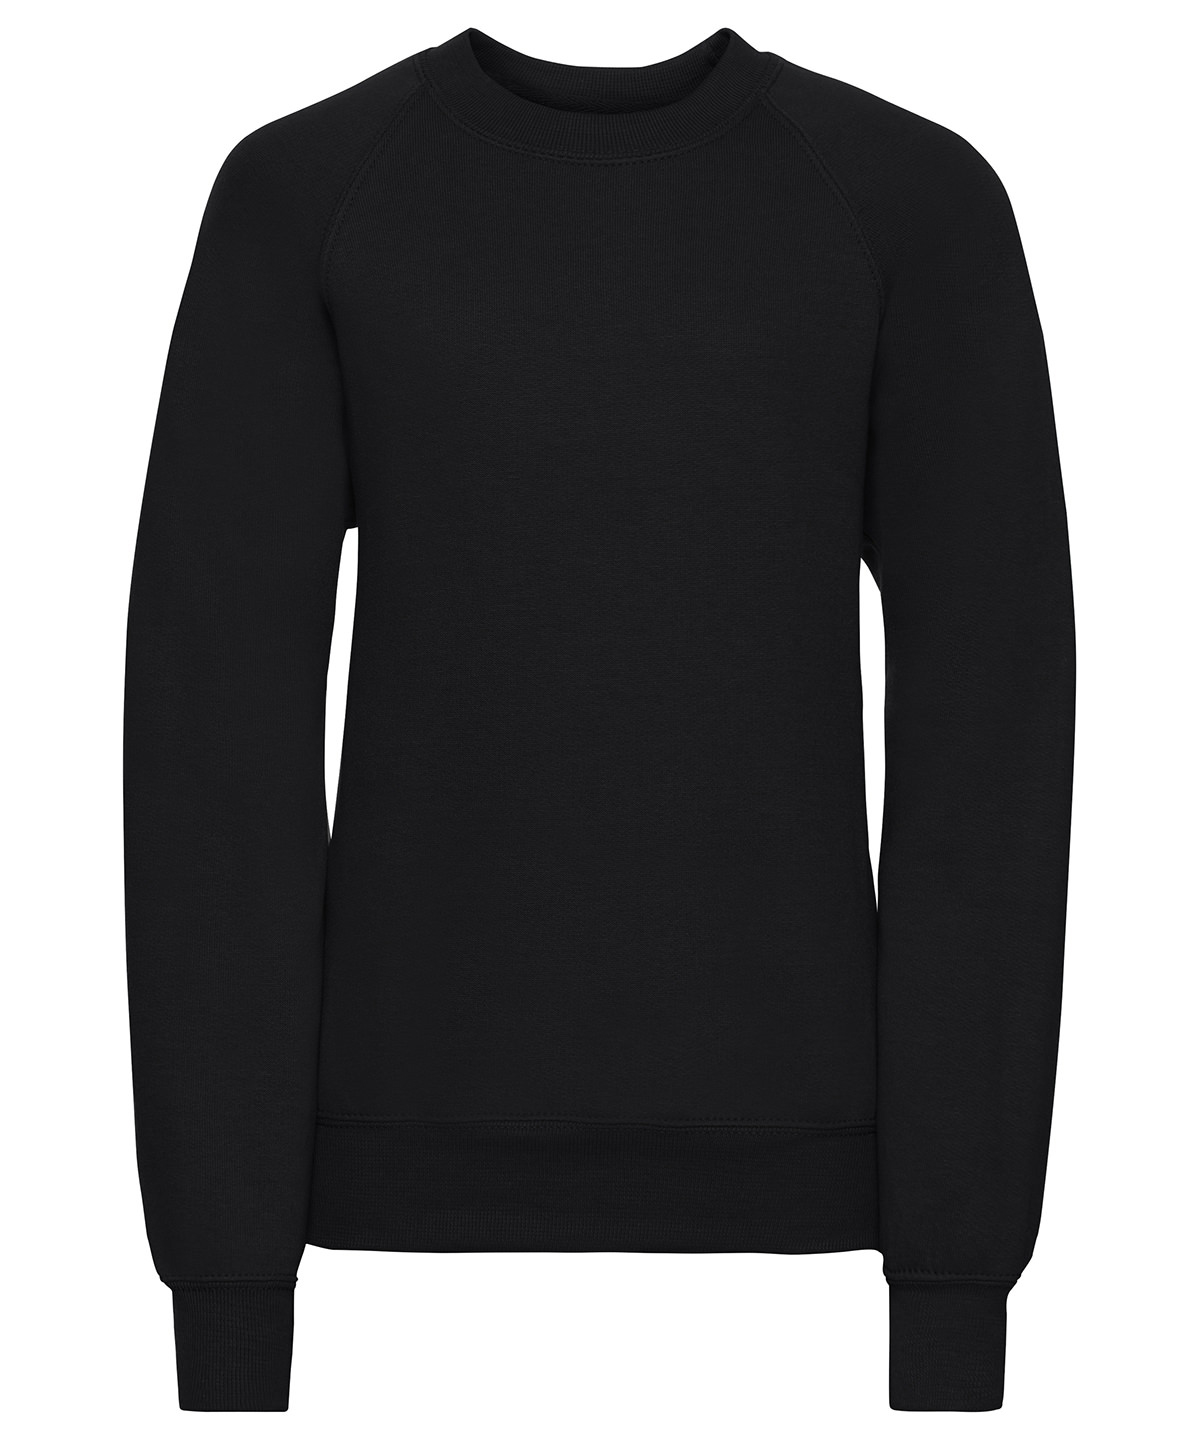 Kids Raglan Sleeve Sweatshirt Black Size 11 / 12